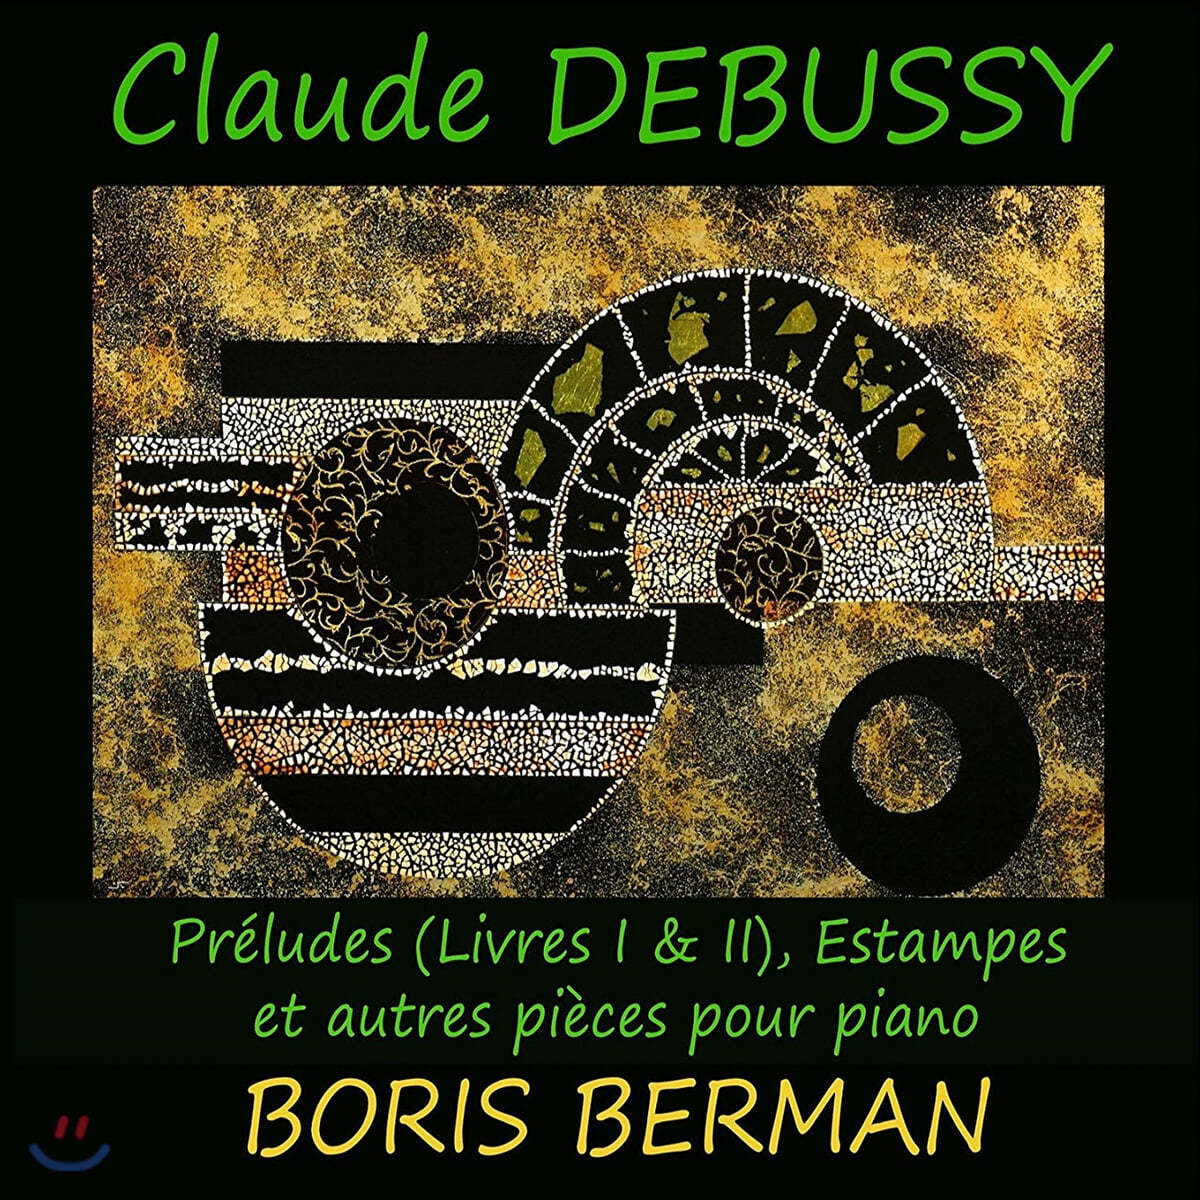 Boris Berman 드뷔시: 전주곡 1, 2권, 판화 (Debussy: Preludes Livres 1, 2, Estampes)